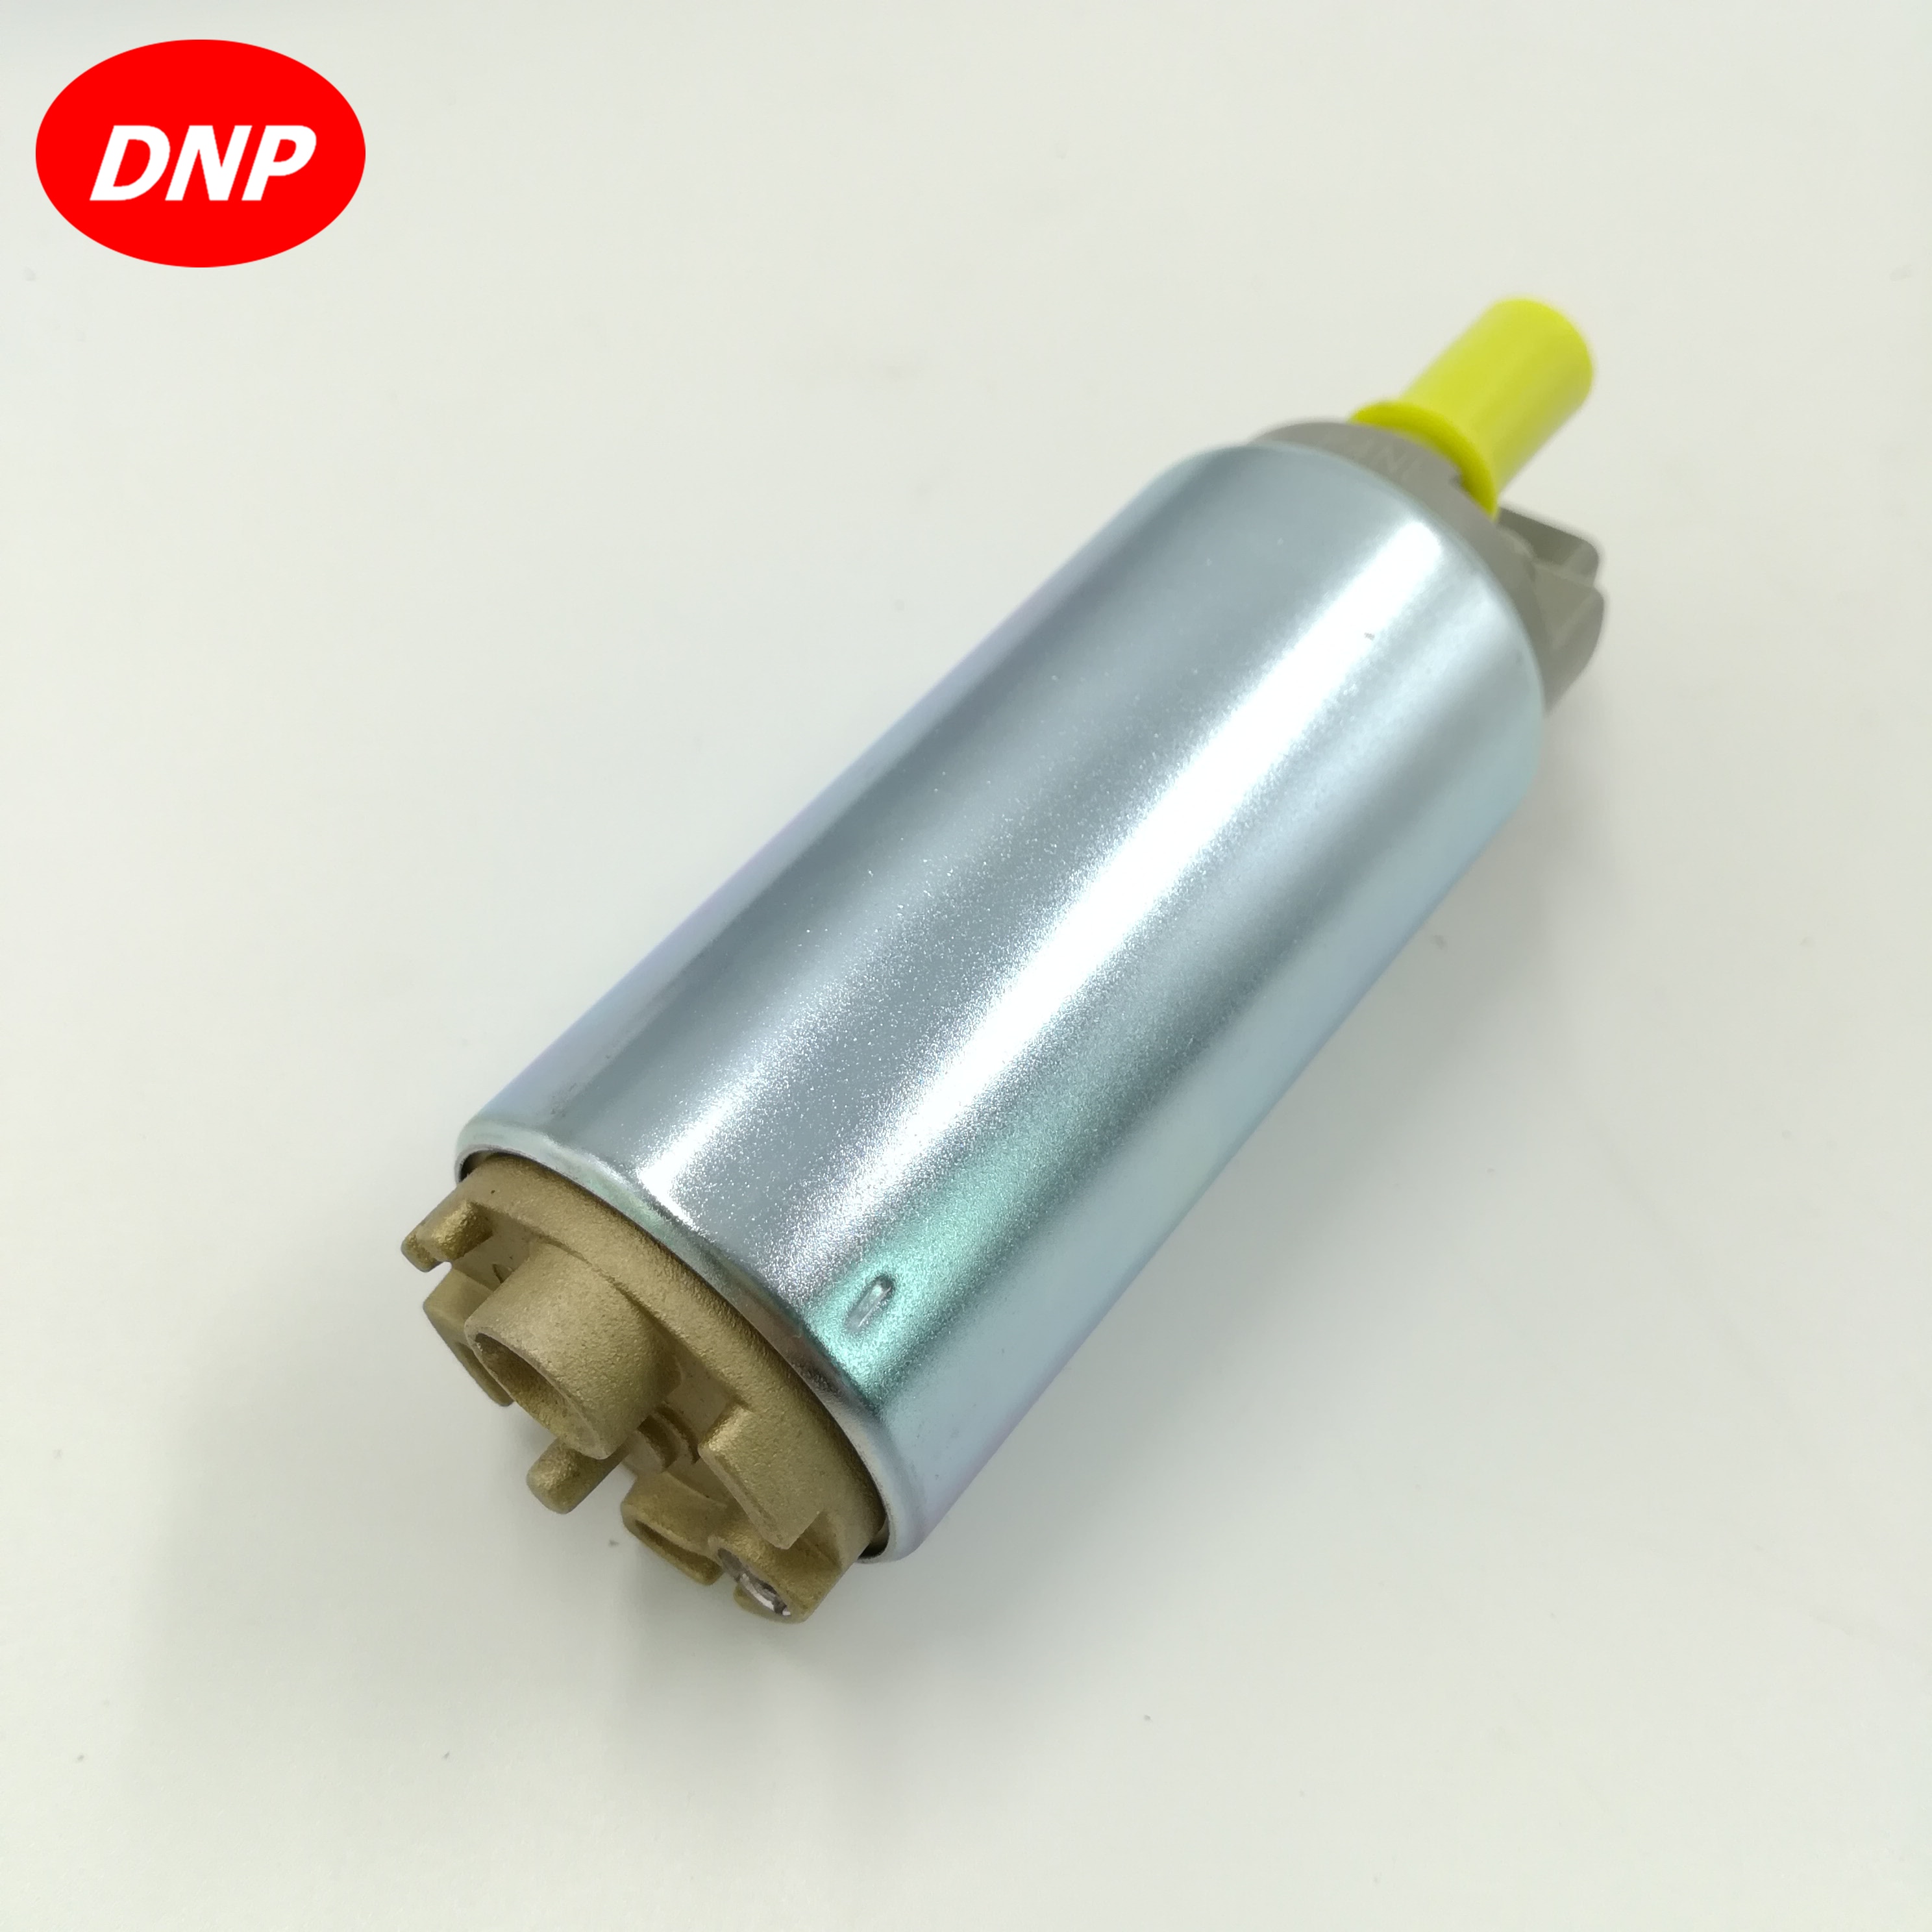 DNP brandstofpomp intank universal fit voor MITSUBISHI Pajero V73 MR464198/MR993310/MR993340